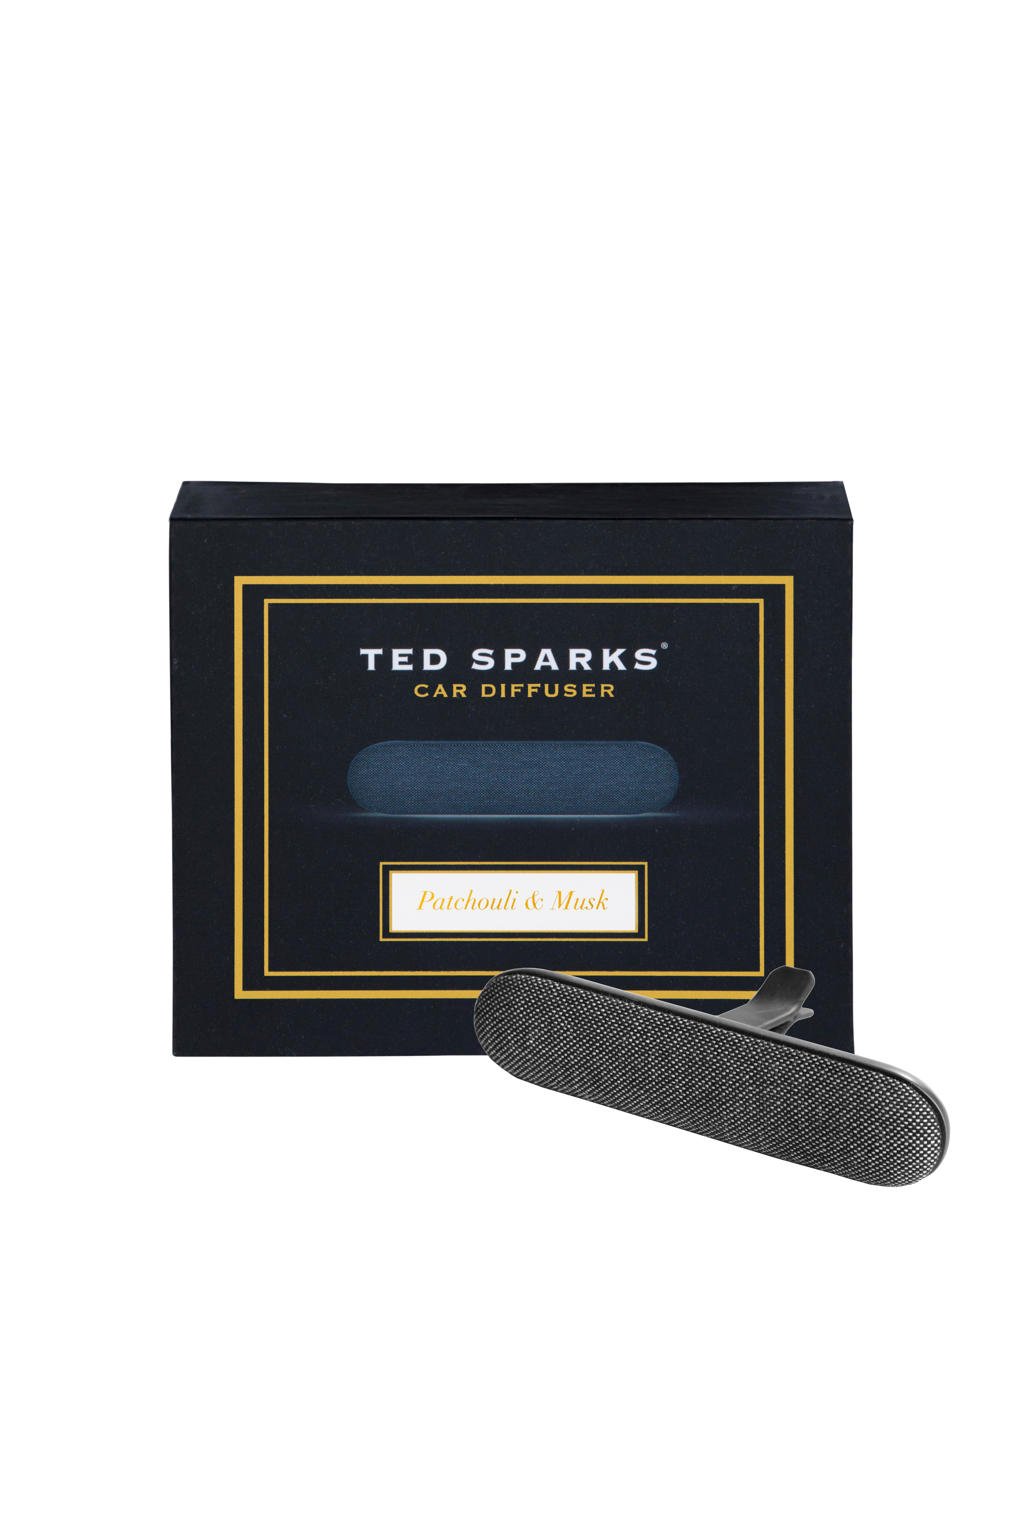 Ted Sparks autoparfum Patchouli & Musk